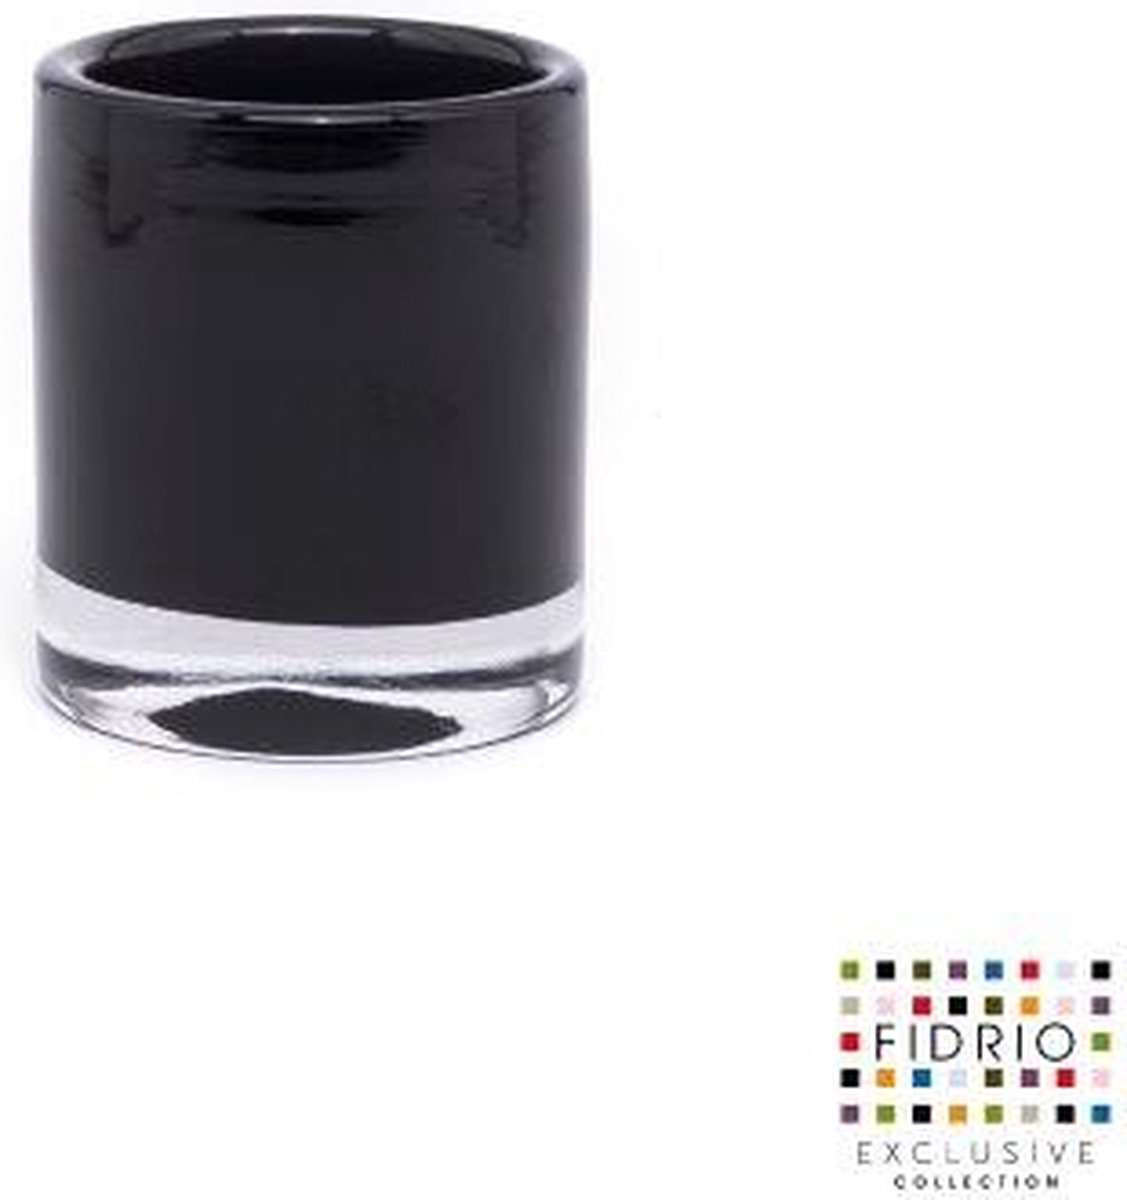 Fidrio Design Cilinder SMALL BLACK glas mondgeblazen